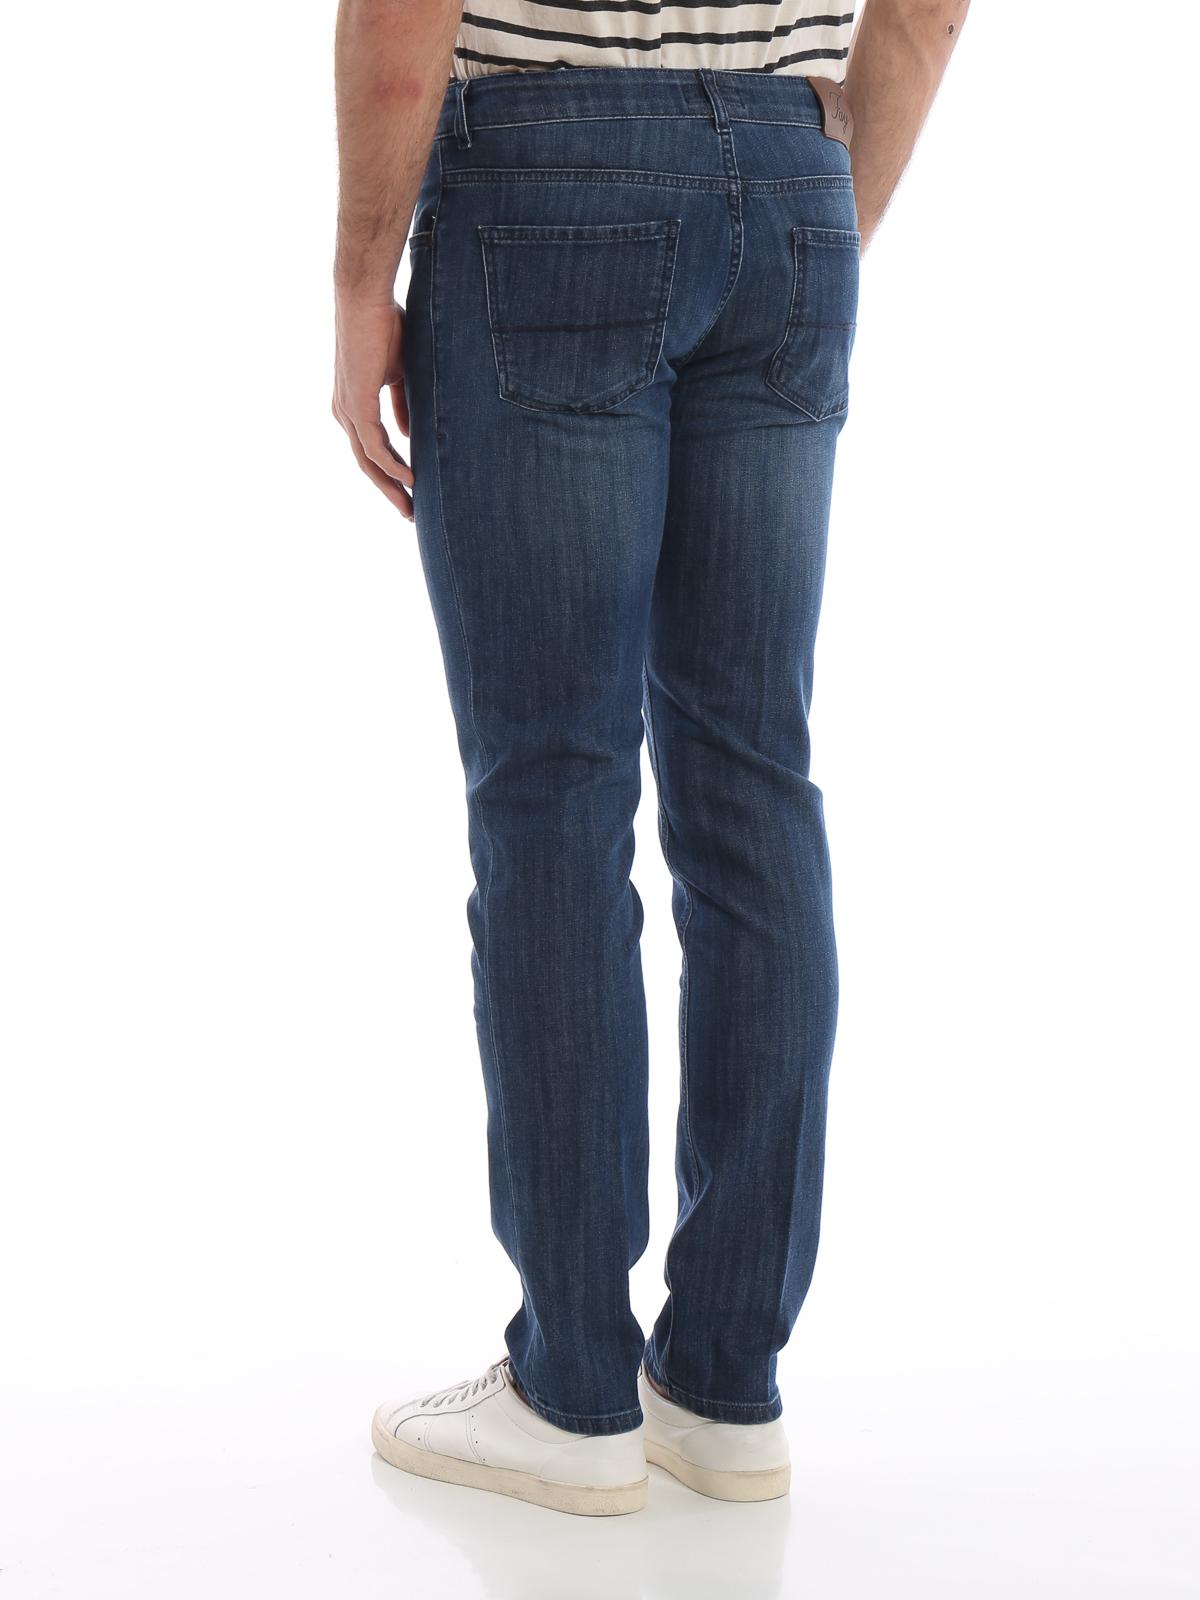 Fay Denim Five Pocket Slim Jeans in Dark Wash (Blue) for Men - Lyst